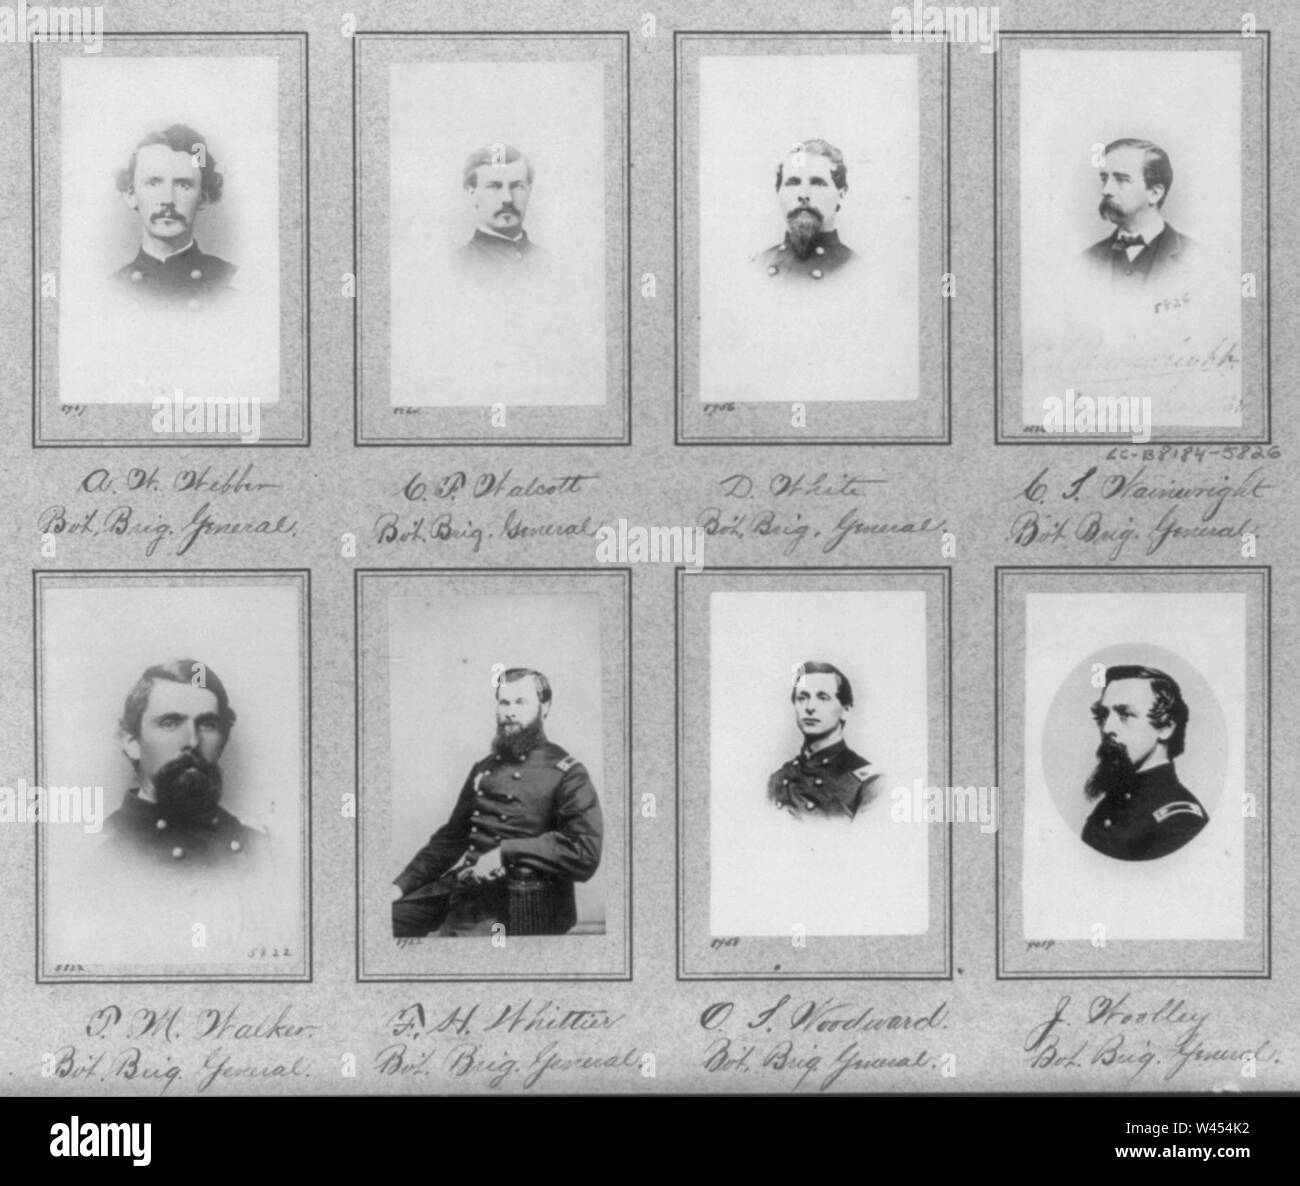 Composito di 7 busti e 1 a mezza lunghezza foto di Brig. Generali A.W. Webber, C.F. Walcott, D. Bianco, C. Wainwright, T.M. Walker, F.H. Whittier, O. Woodward, J. Woolley Foto Stock